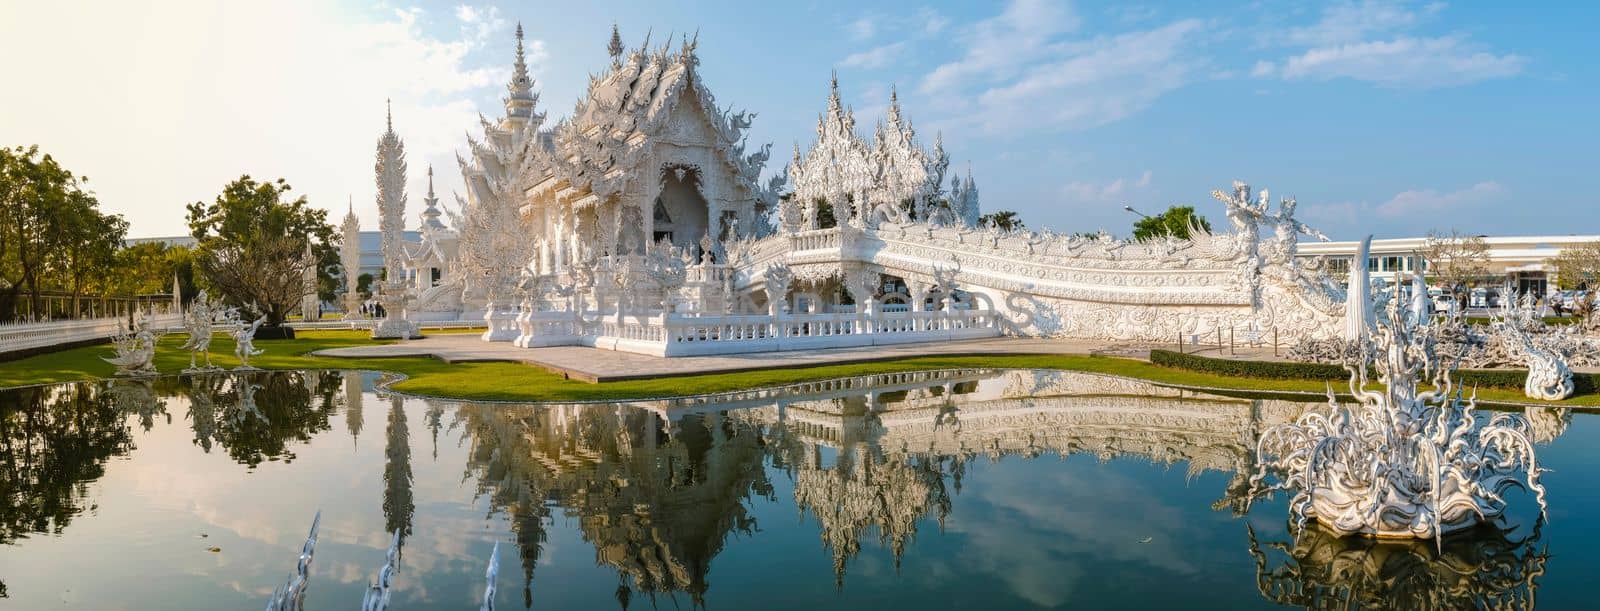 White temple Chiang Rai Thailand, Wat Rong Khun, aka The White Temple, in Chiang Rai, Thailand. by fokkebok